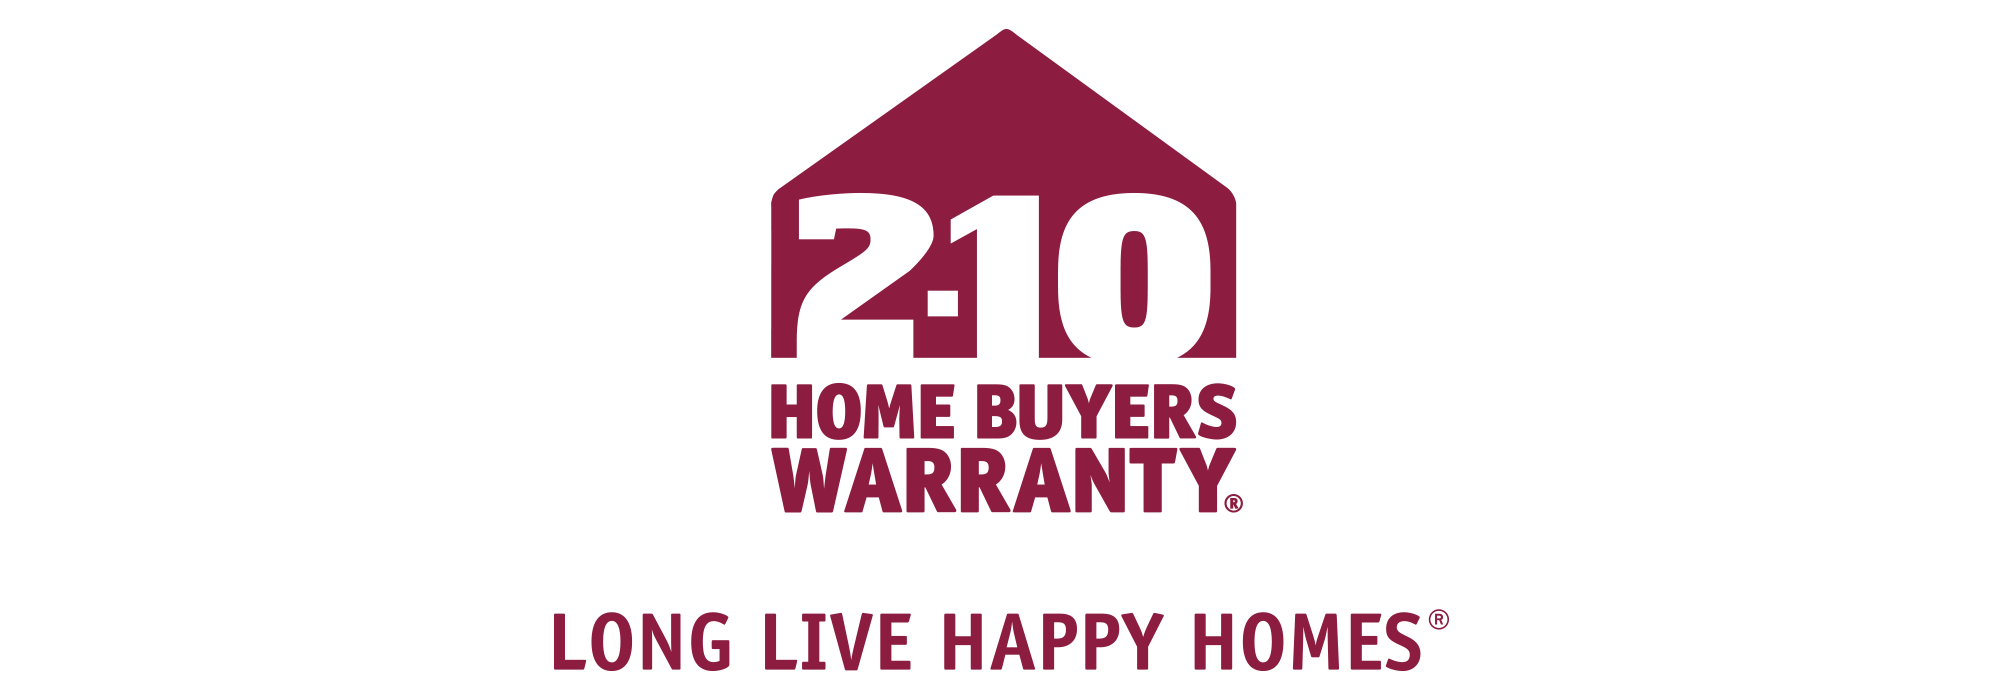 210 Home Buyers Warranty